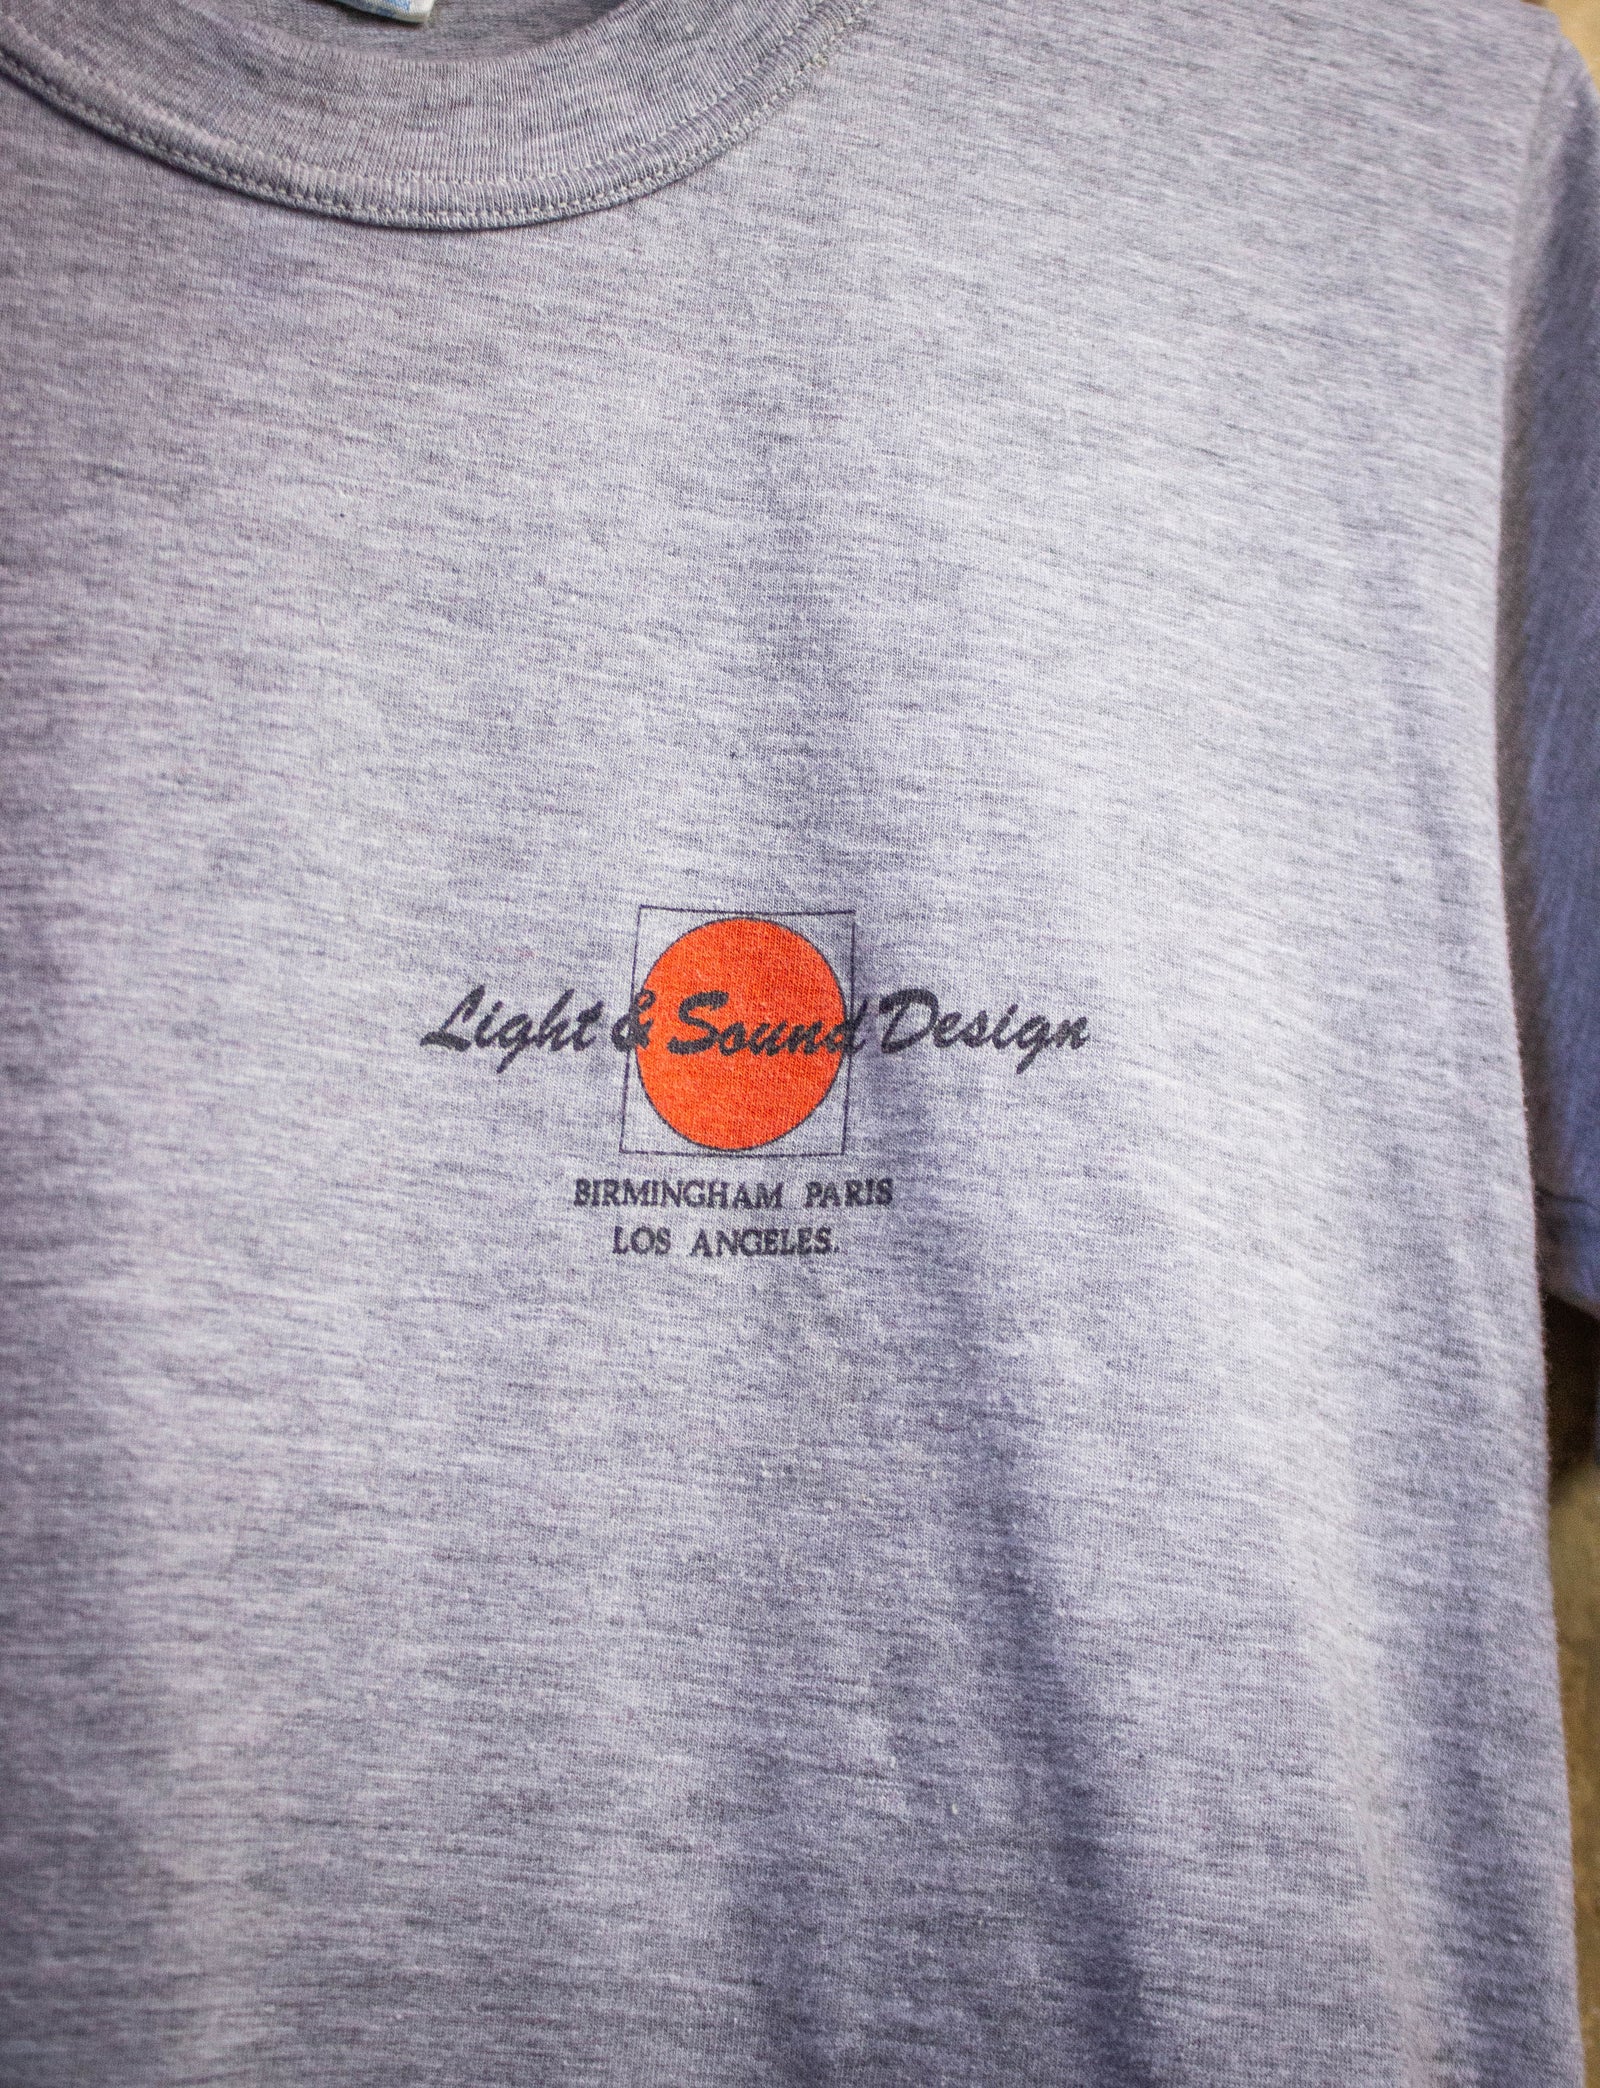 Vintage Light & Sound Design (LSD) Crew Concert T Shirt 70s Gray